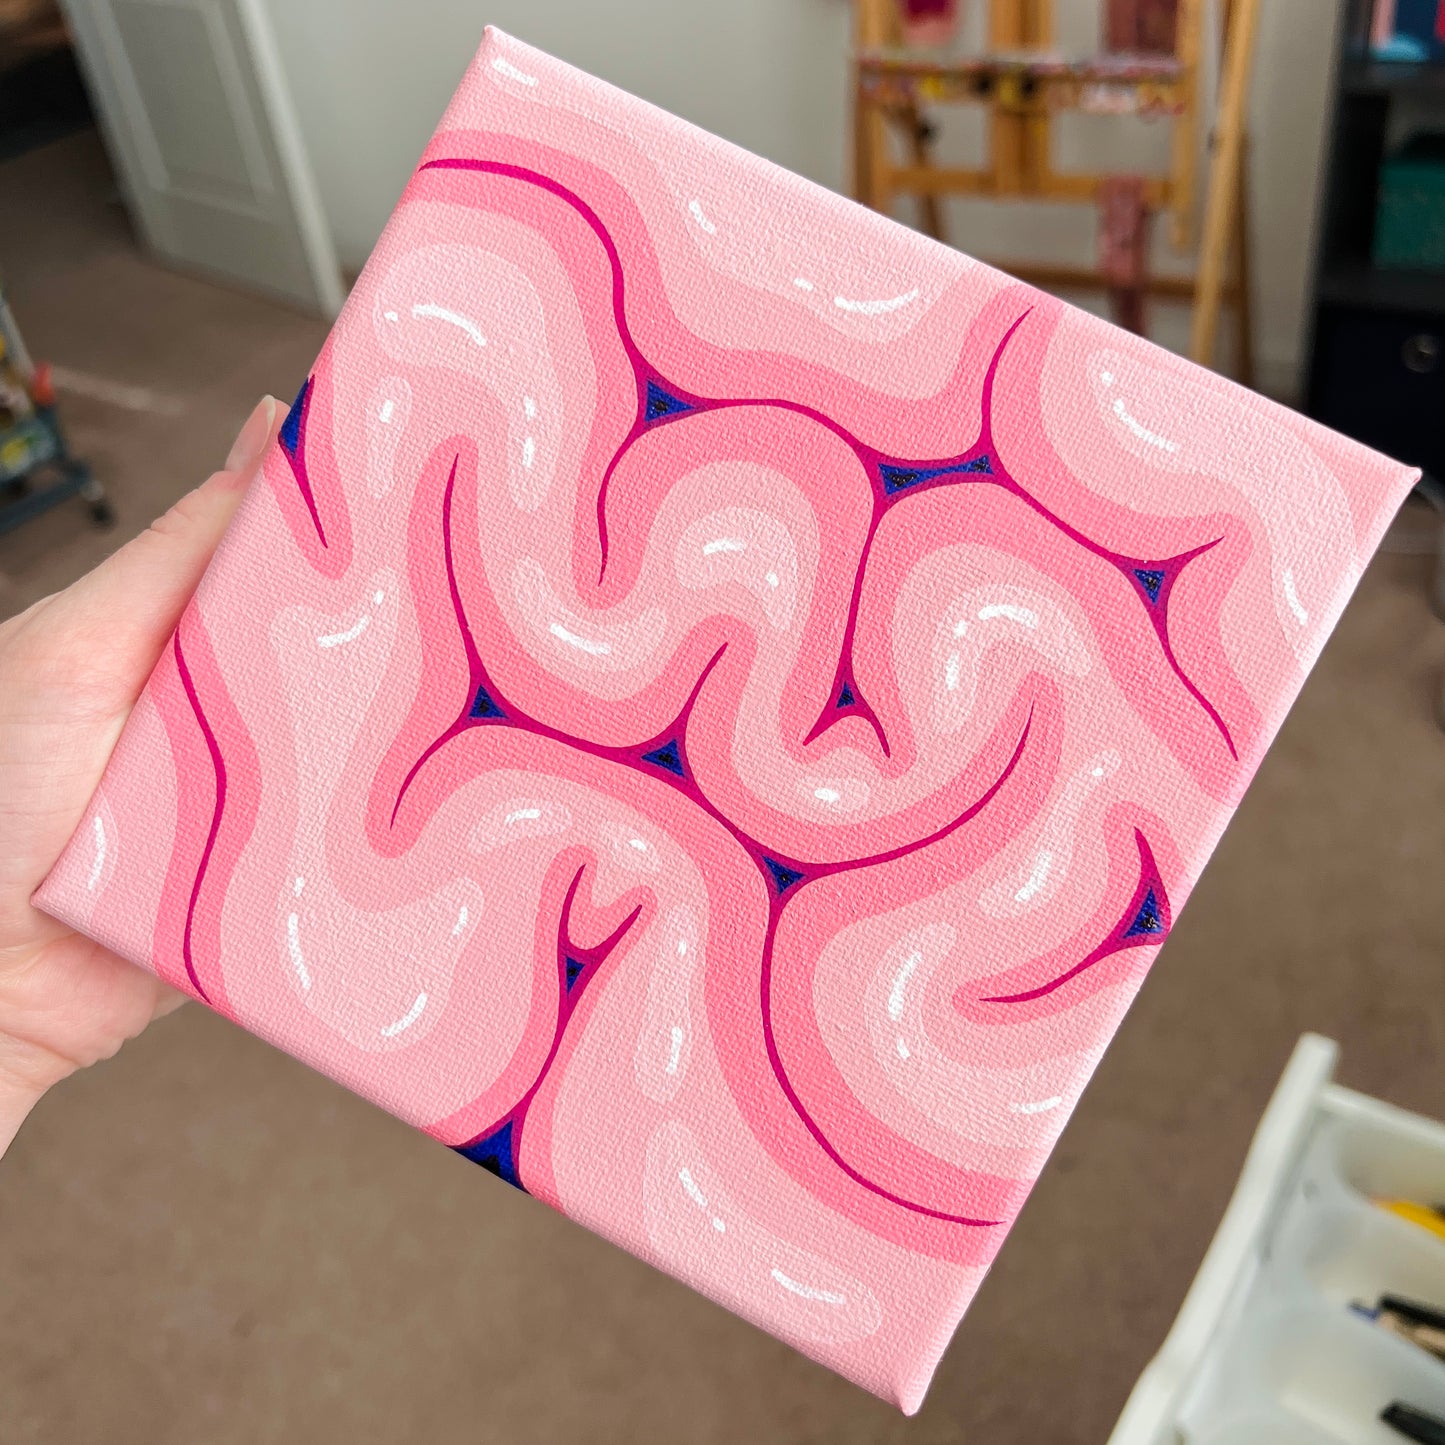 “Brains or Intestines?” Painting